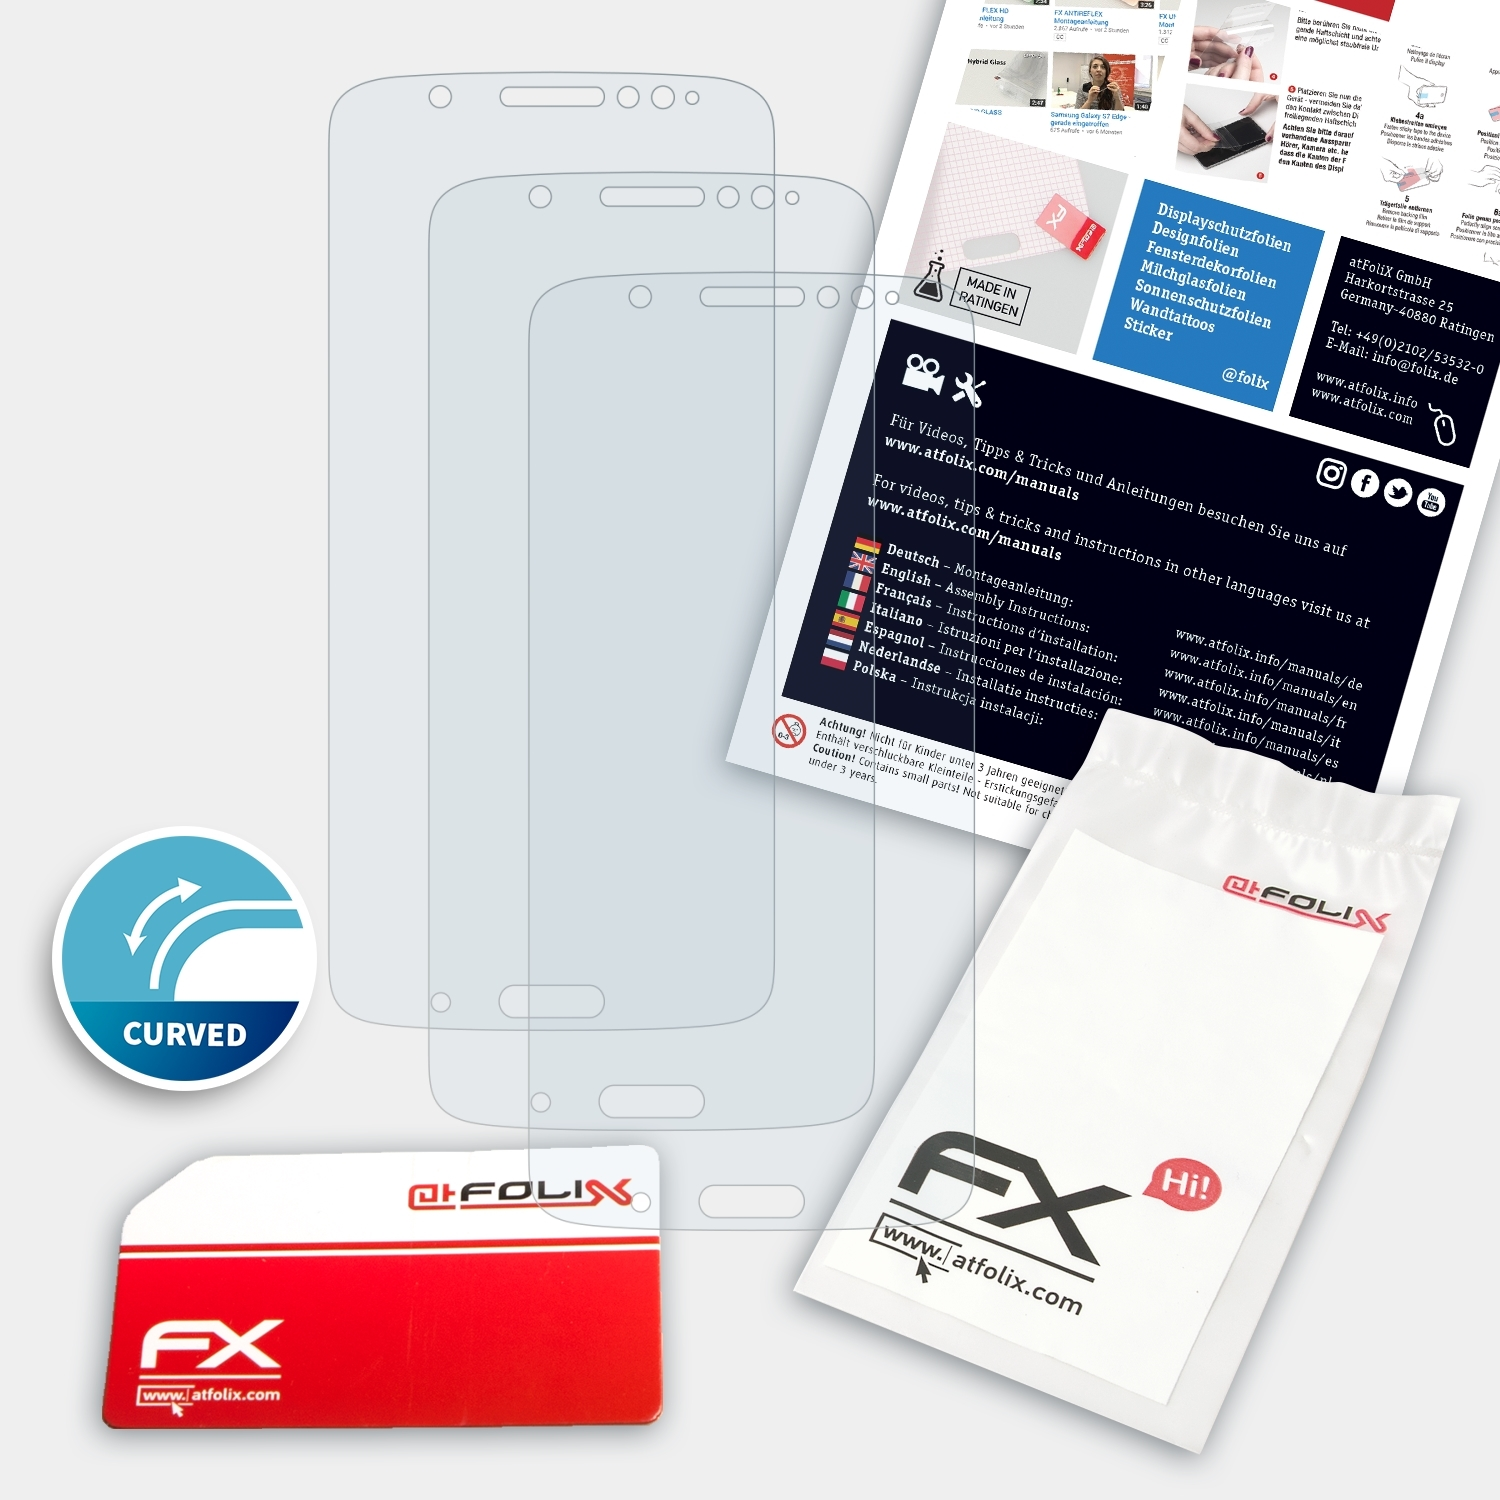 ATFOLIX 3x FX-ActiFleX Displayschutz(für Lenovo Motorola G6 Plus) Moto